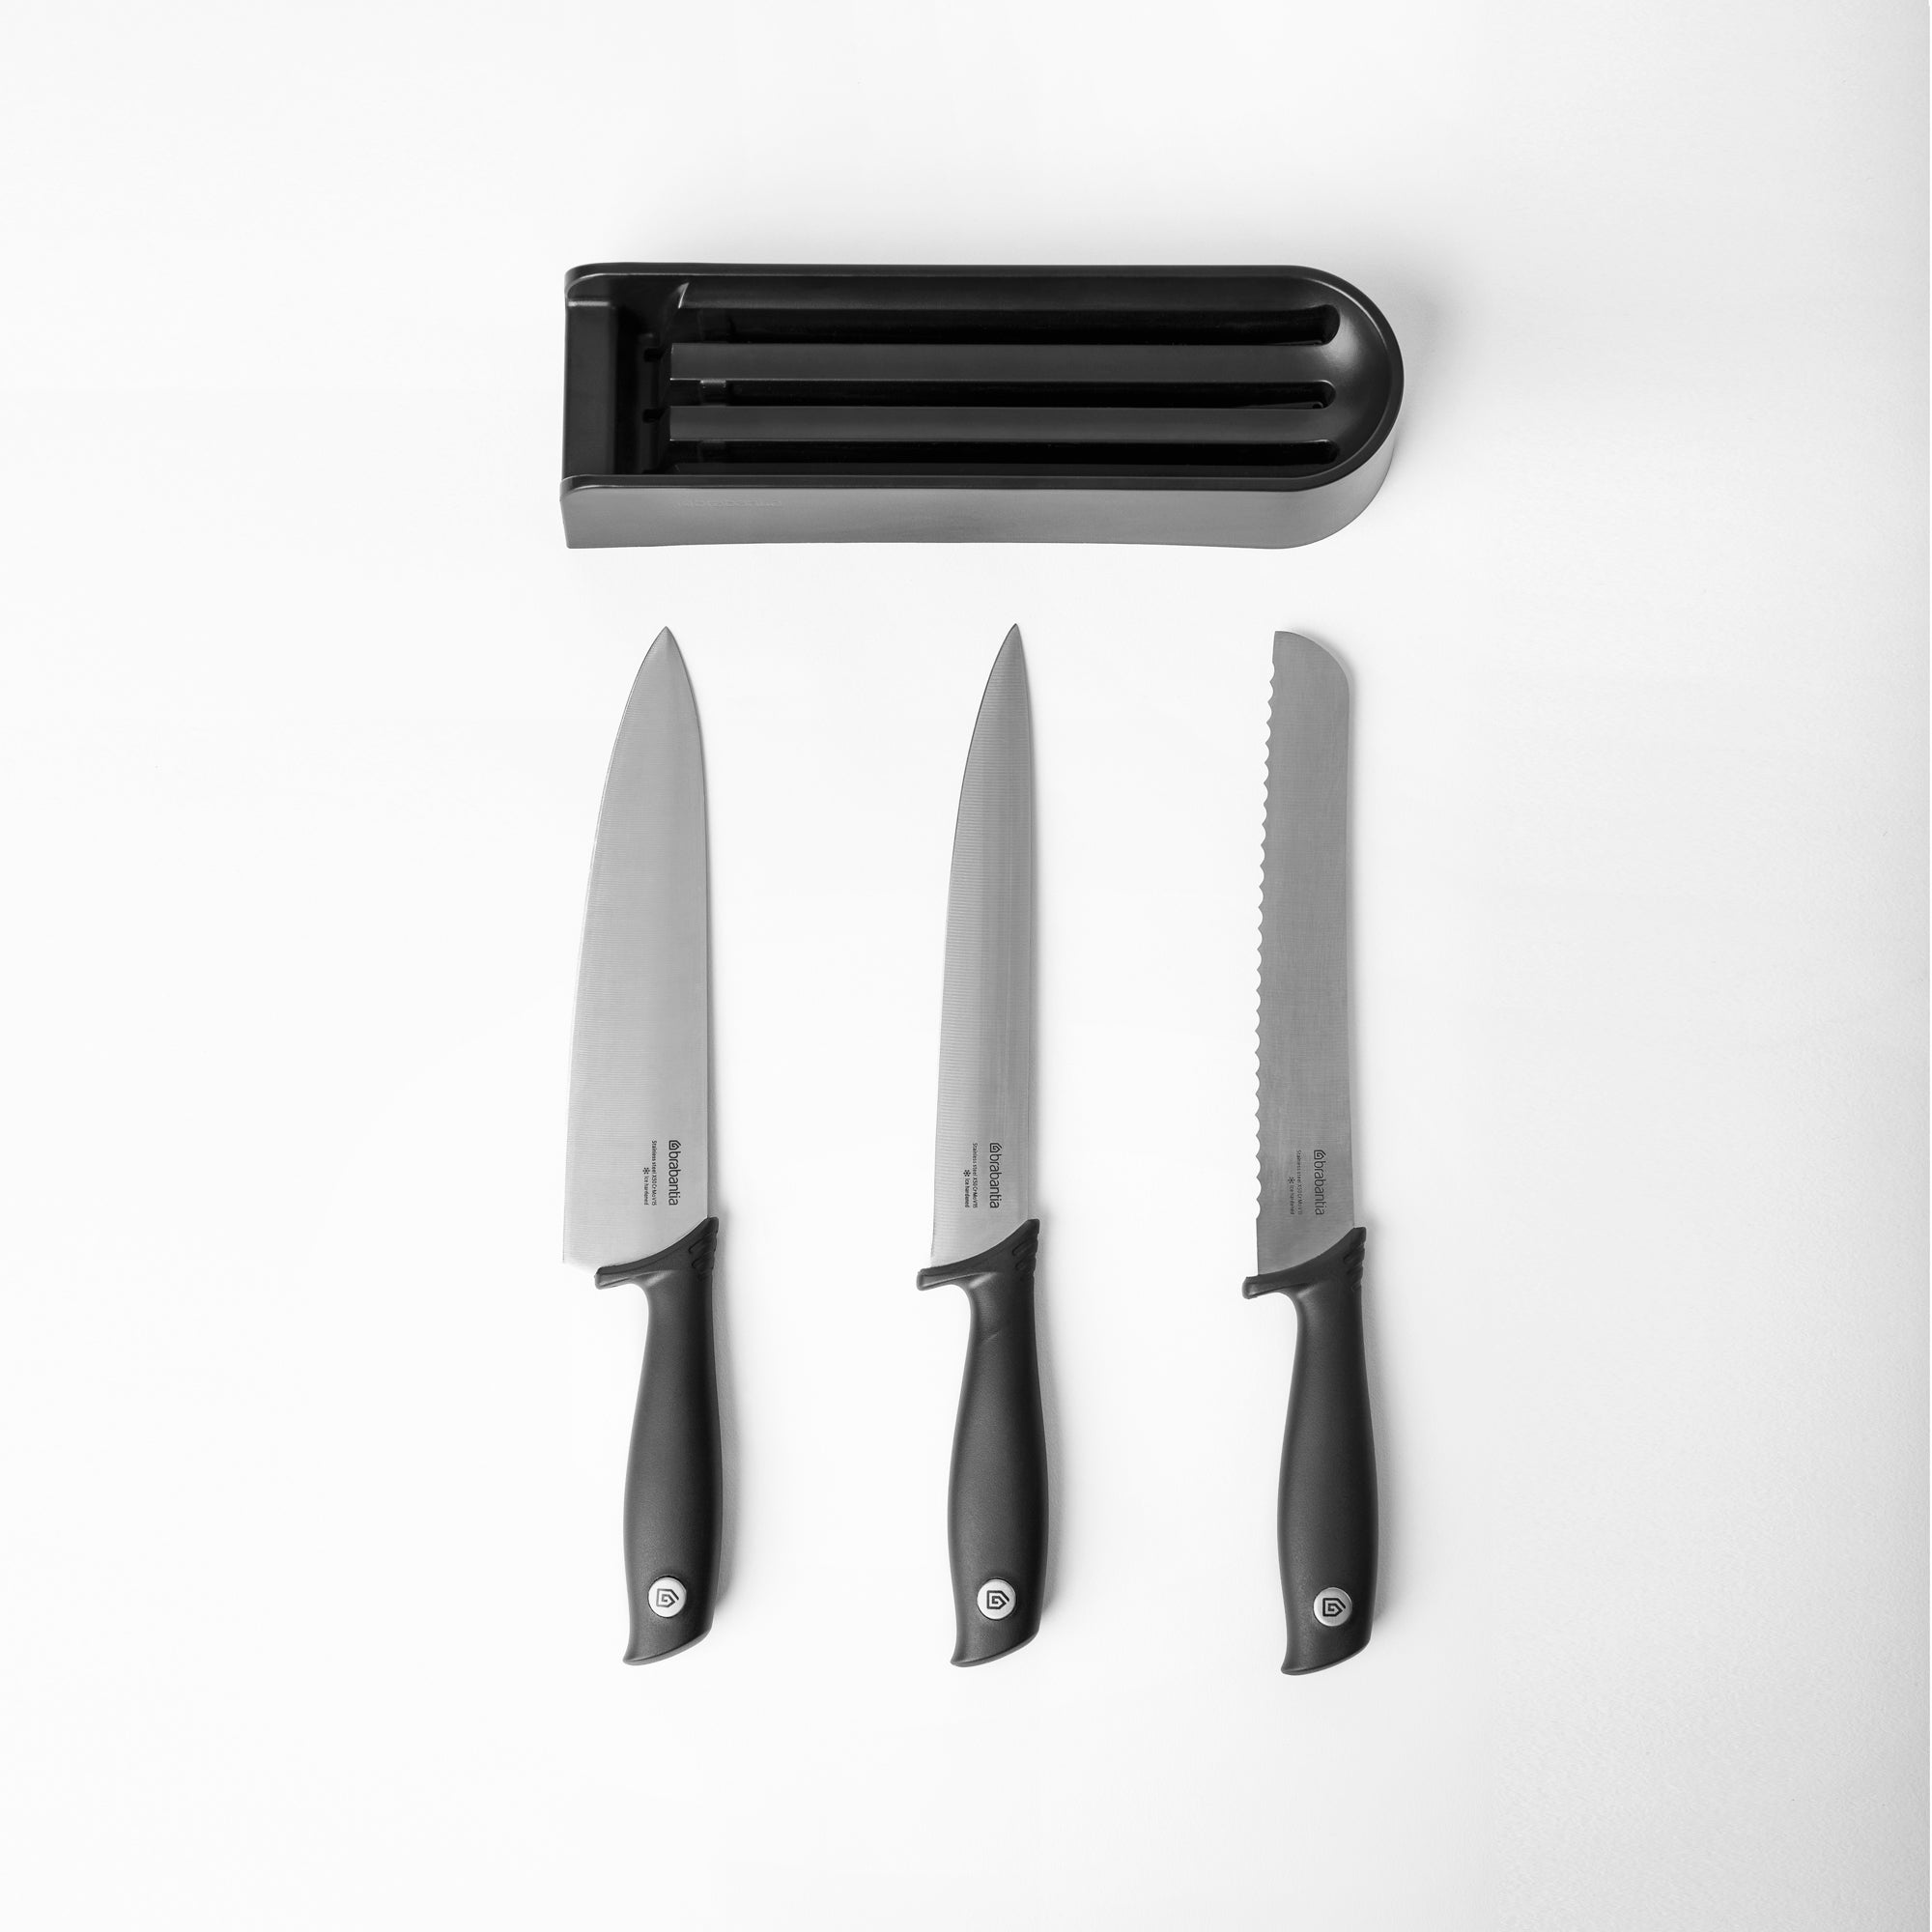 Brabantia Tasty 5-Knife Plastic Knife Block Set 123061 - The Home